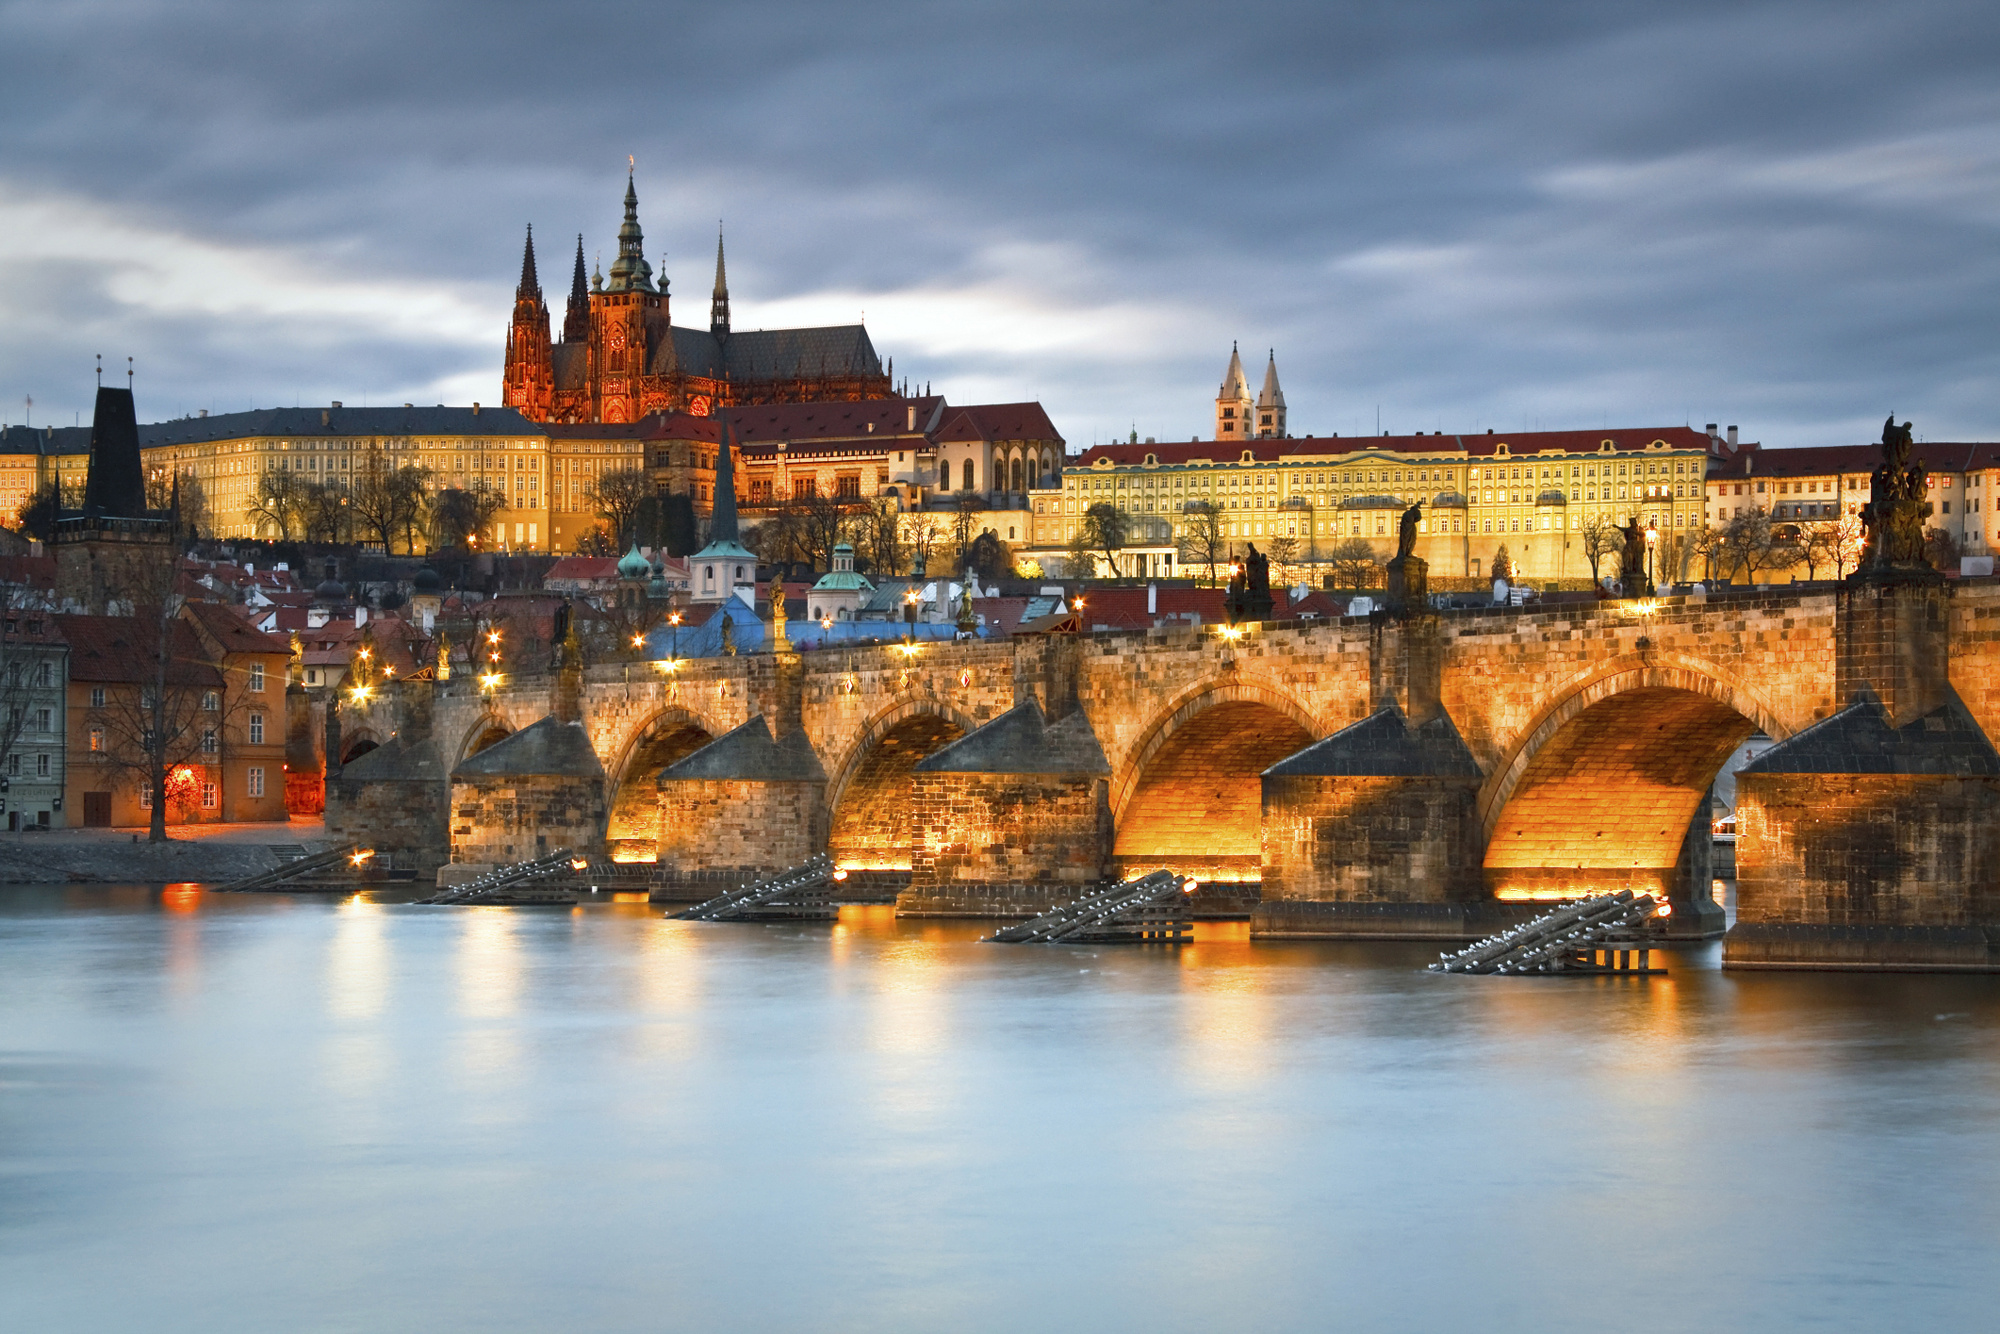 Prague Castle, Man-made wonder, High-quality pictures, 2019 wallpapers, 2000x1340 HD Desktop